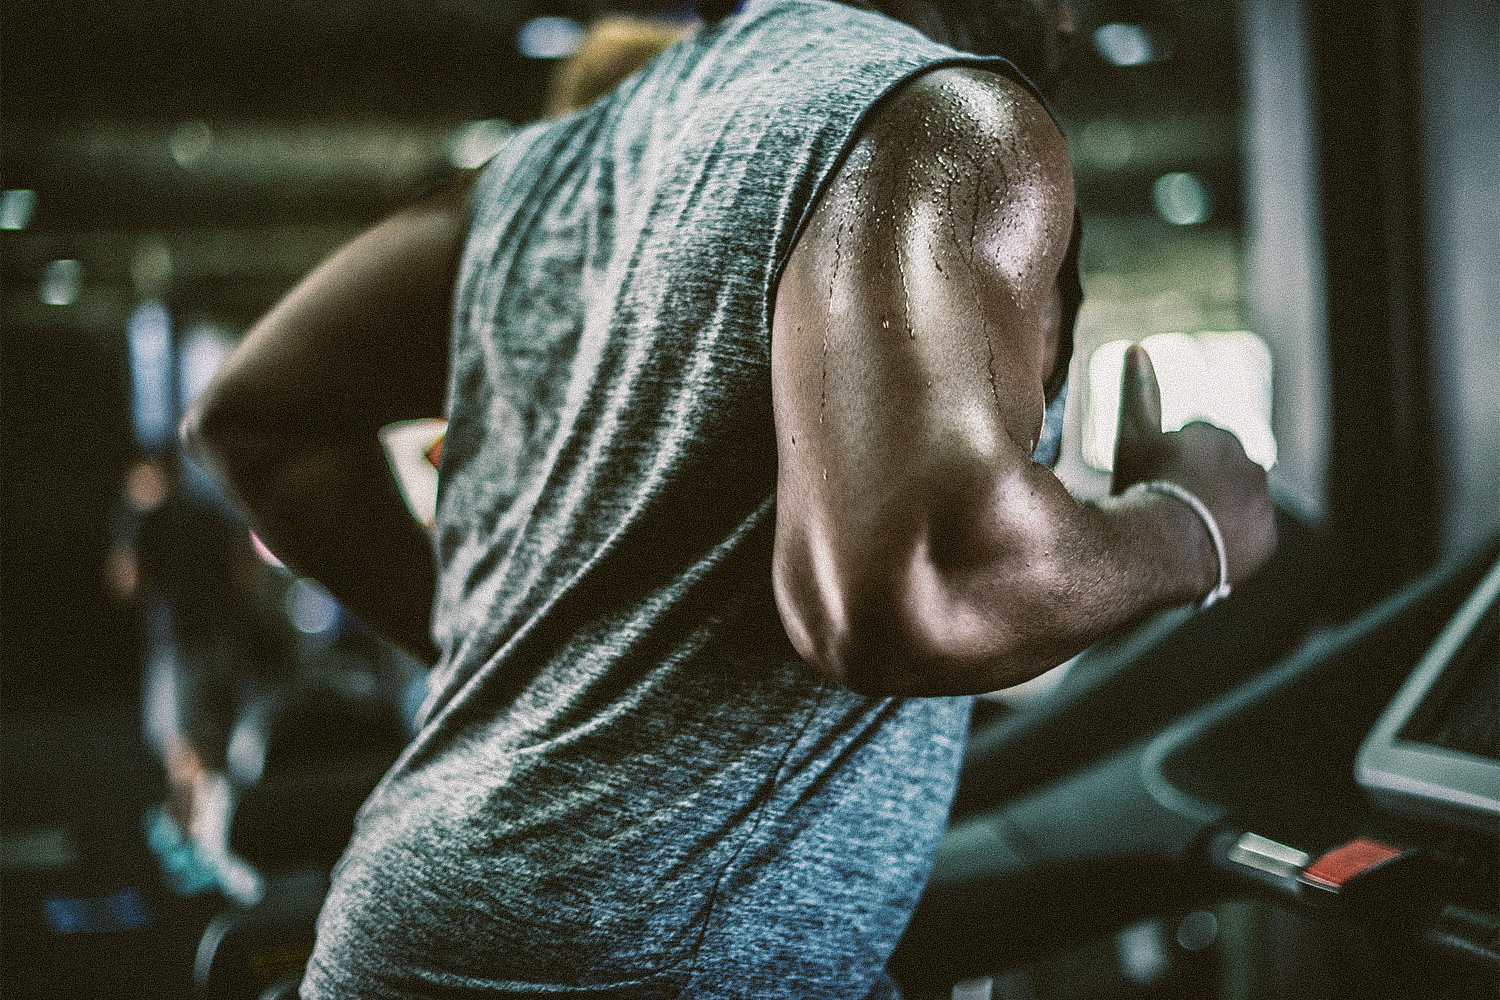 A sweaty man in a sleeveless shirt runs on a treadmill.